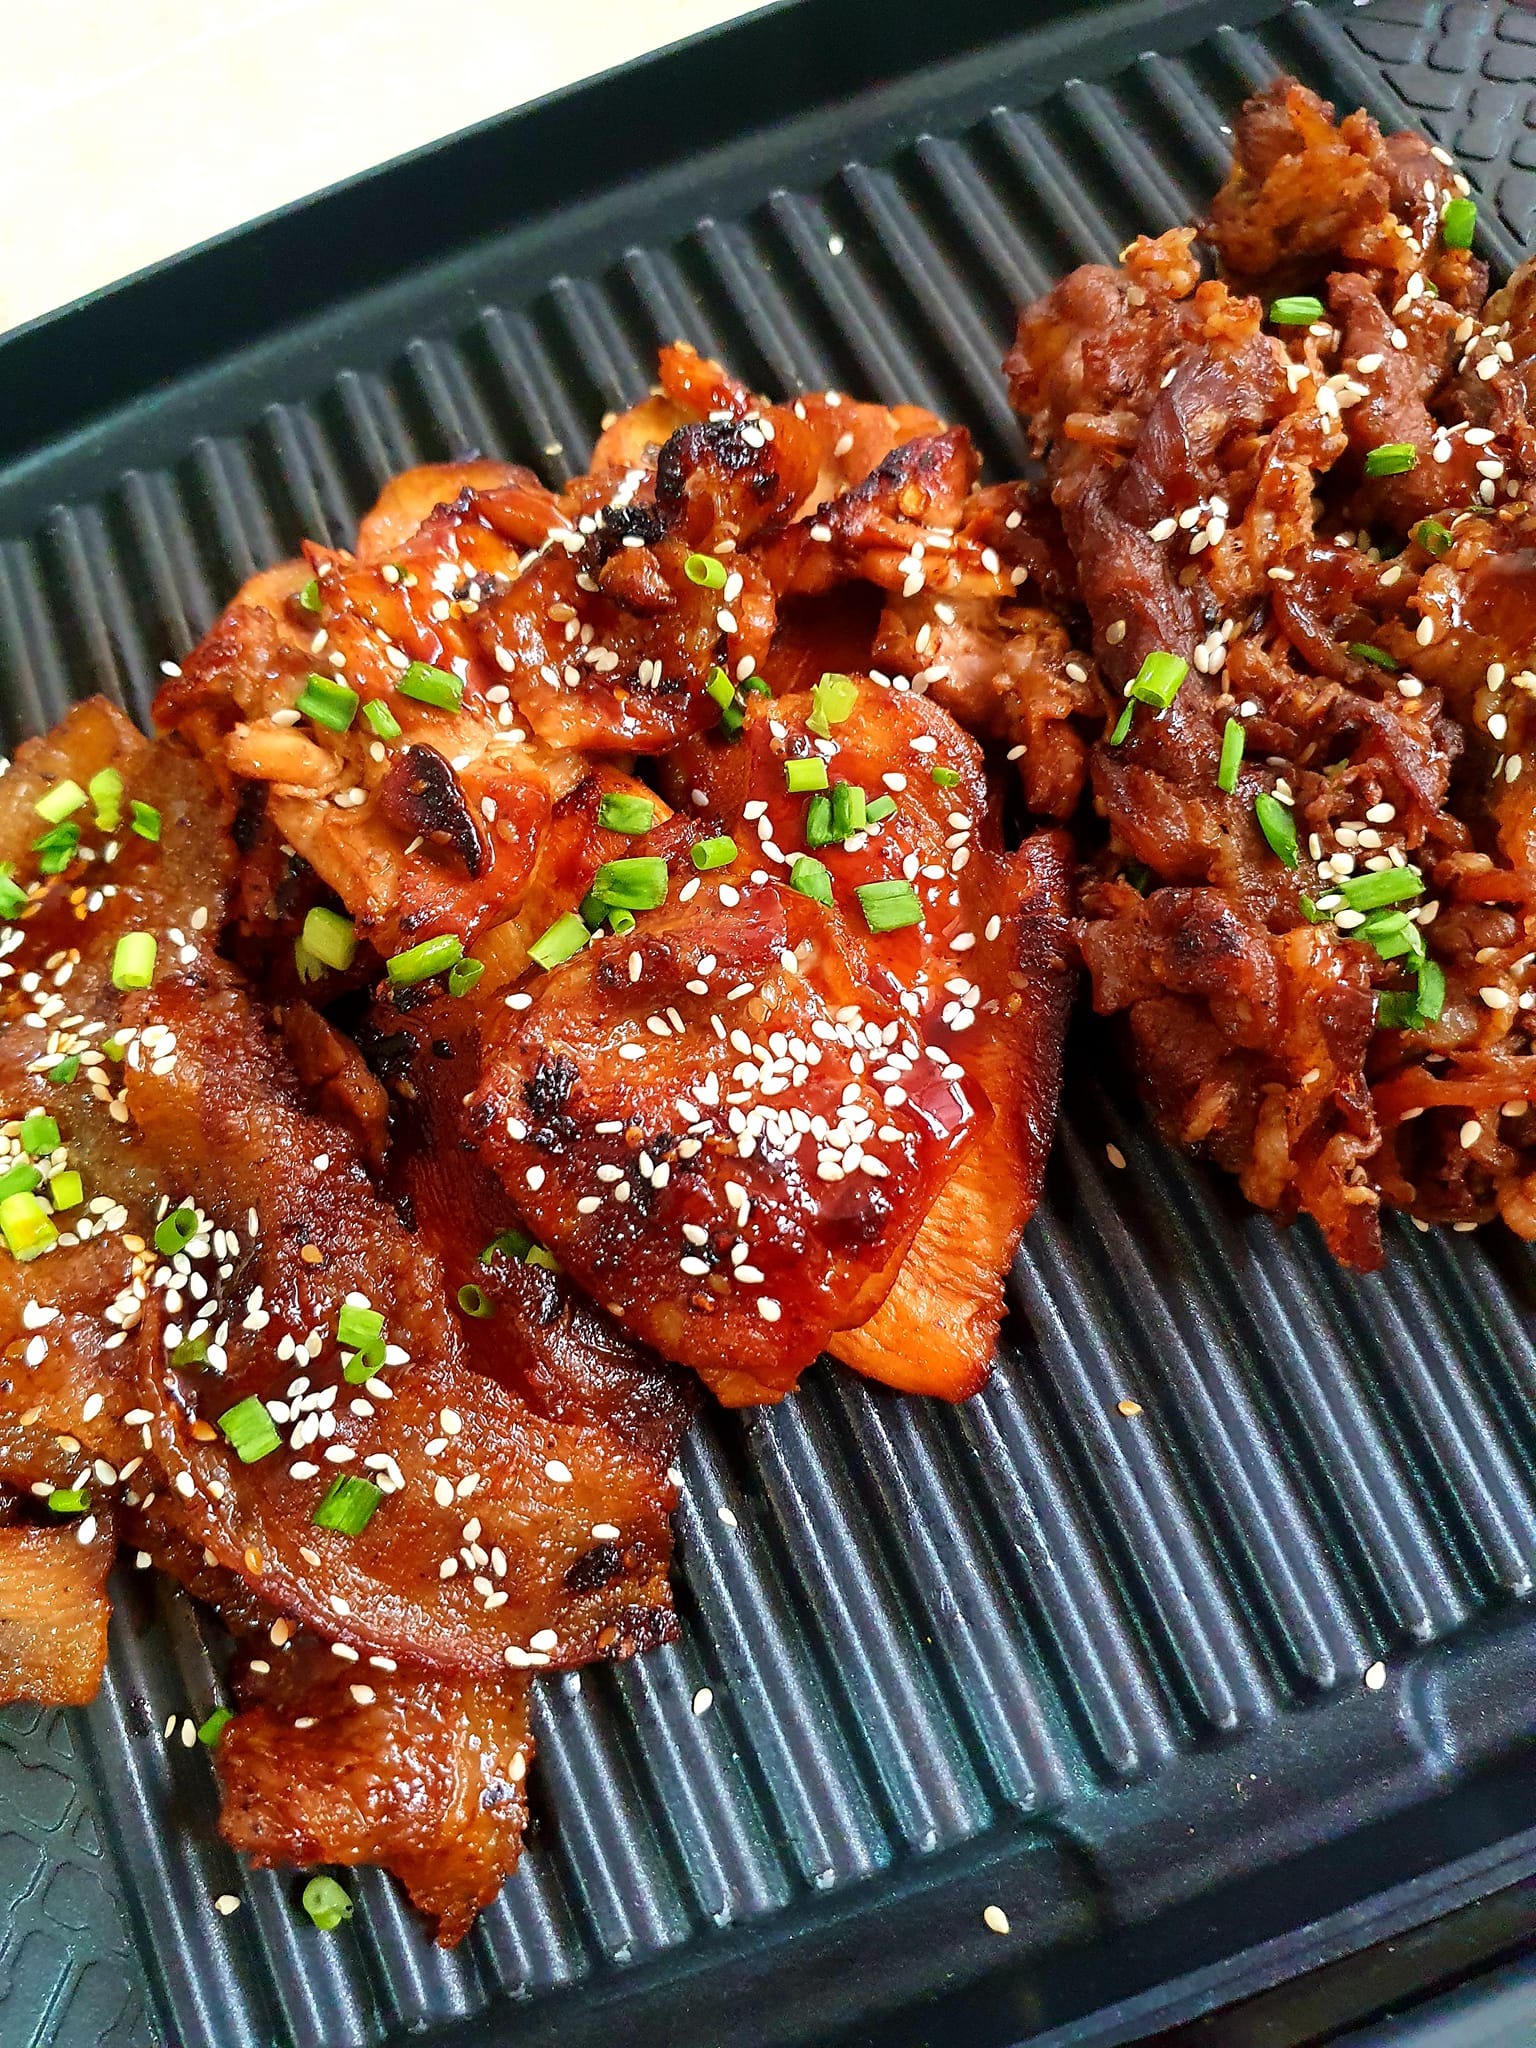 PerfectMatch Low-carb l Ready to Cook l Keto Samgyup Korean Chicken BBQ l Meathooray l No Soy  l No Sugar l  No MSG  l 400g